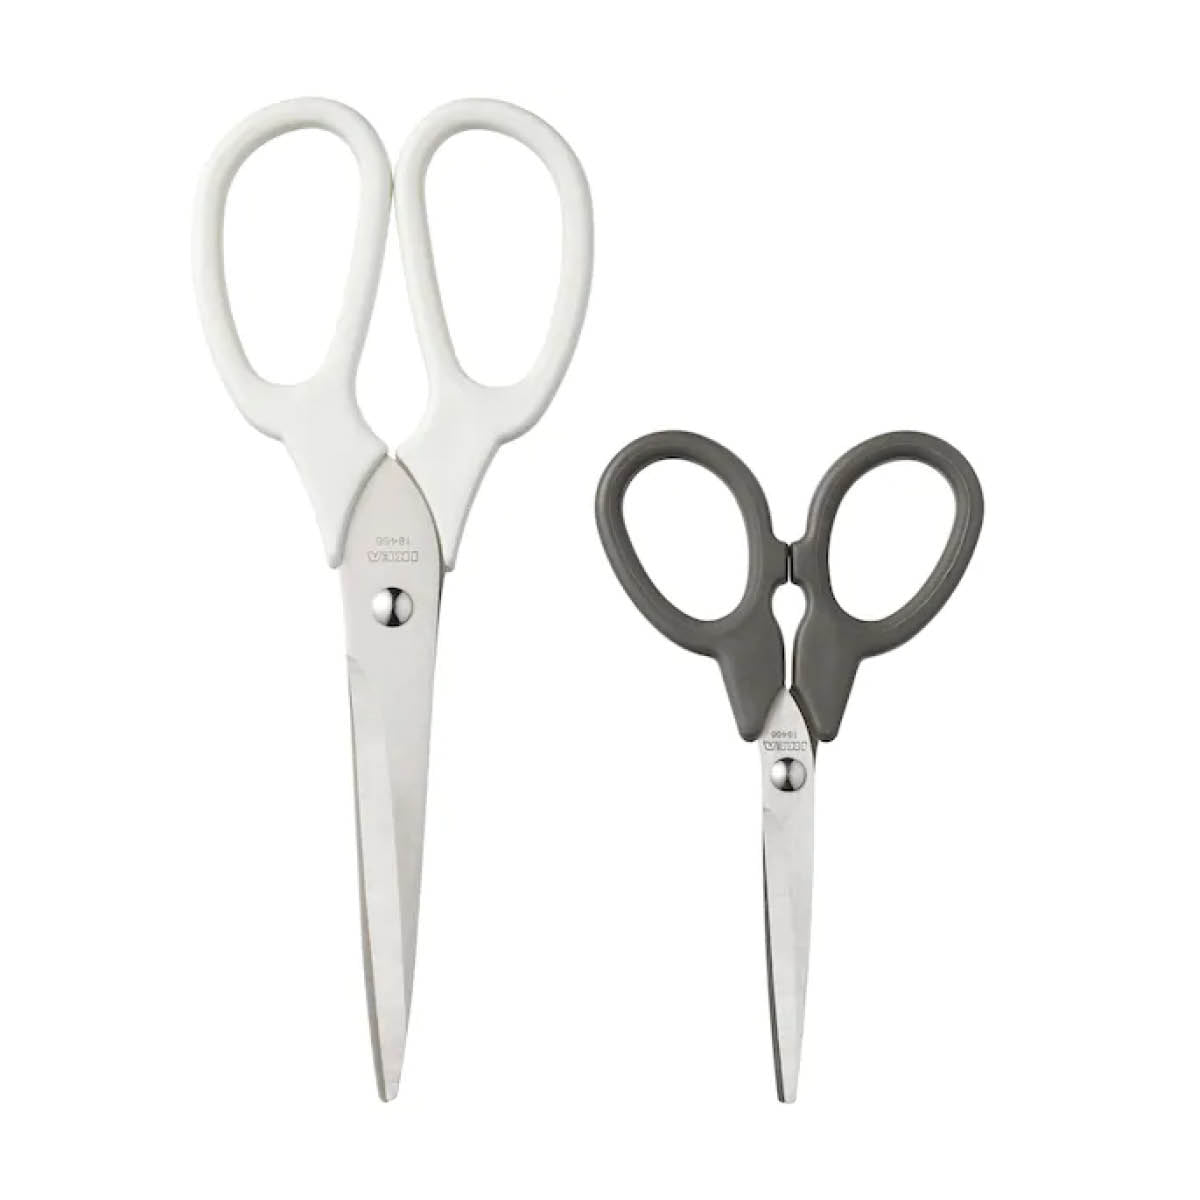 Ikea Markbart Scissors Set of 2